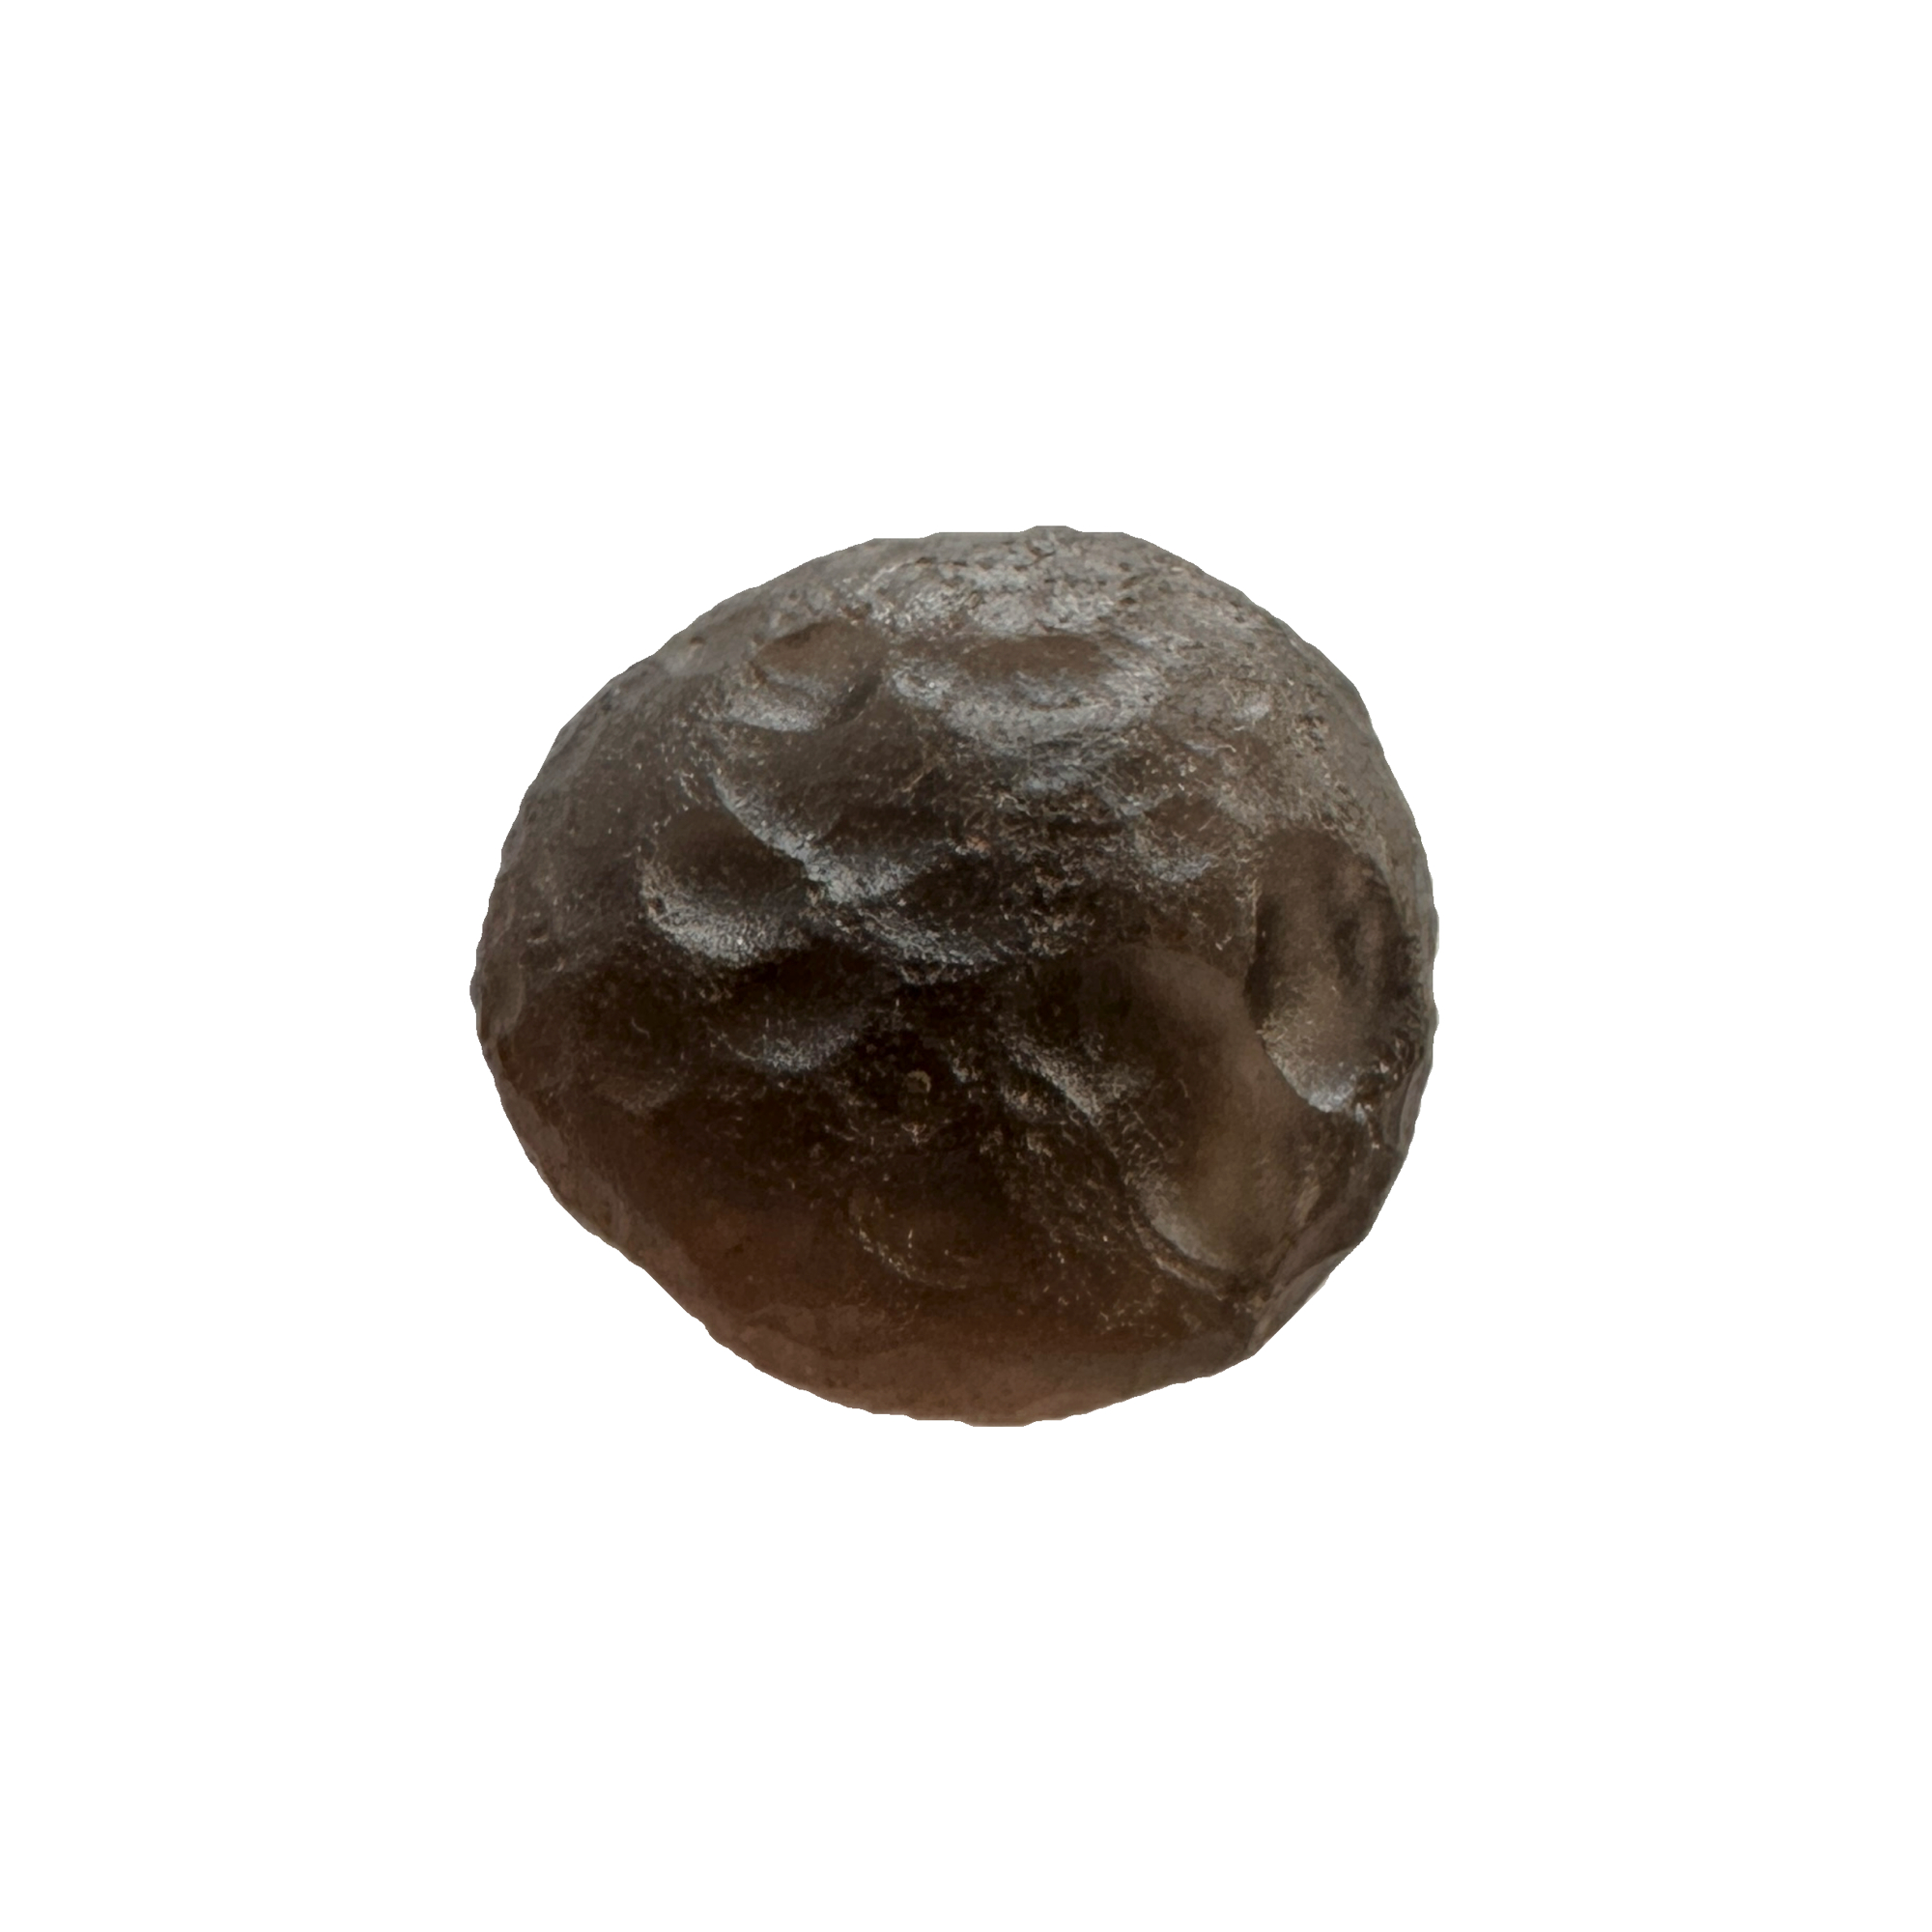 extreme closeup of a rare tektite, Colombianite